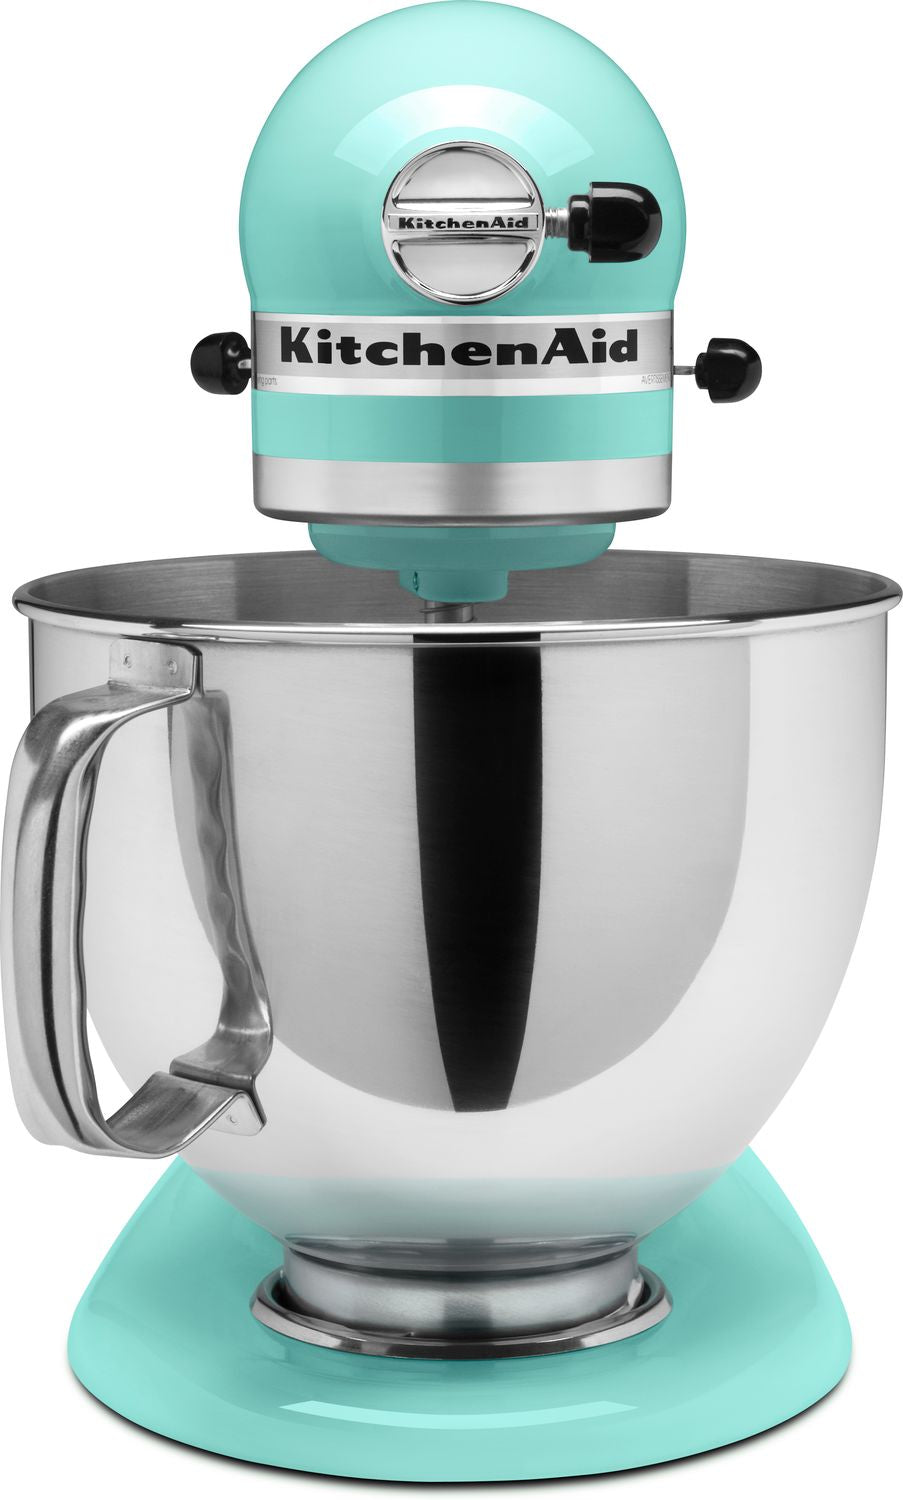 KitchenAid Ice Blue 5-Quart Tilt-Head Stand Mixer - KSM150PSIC